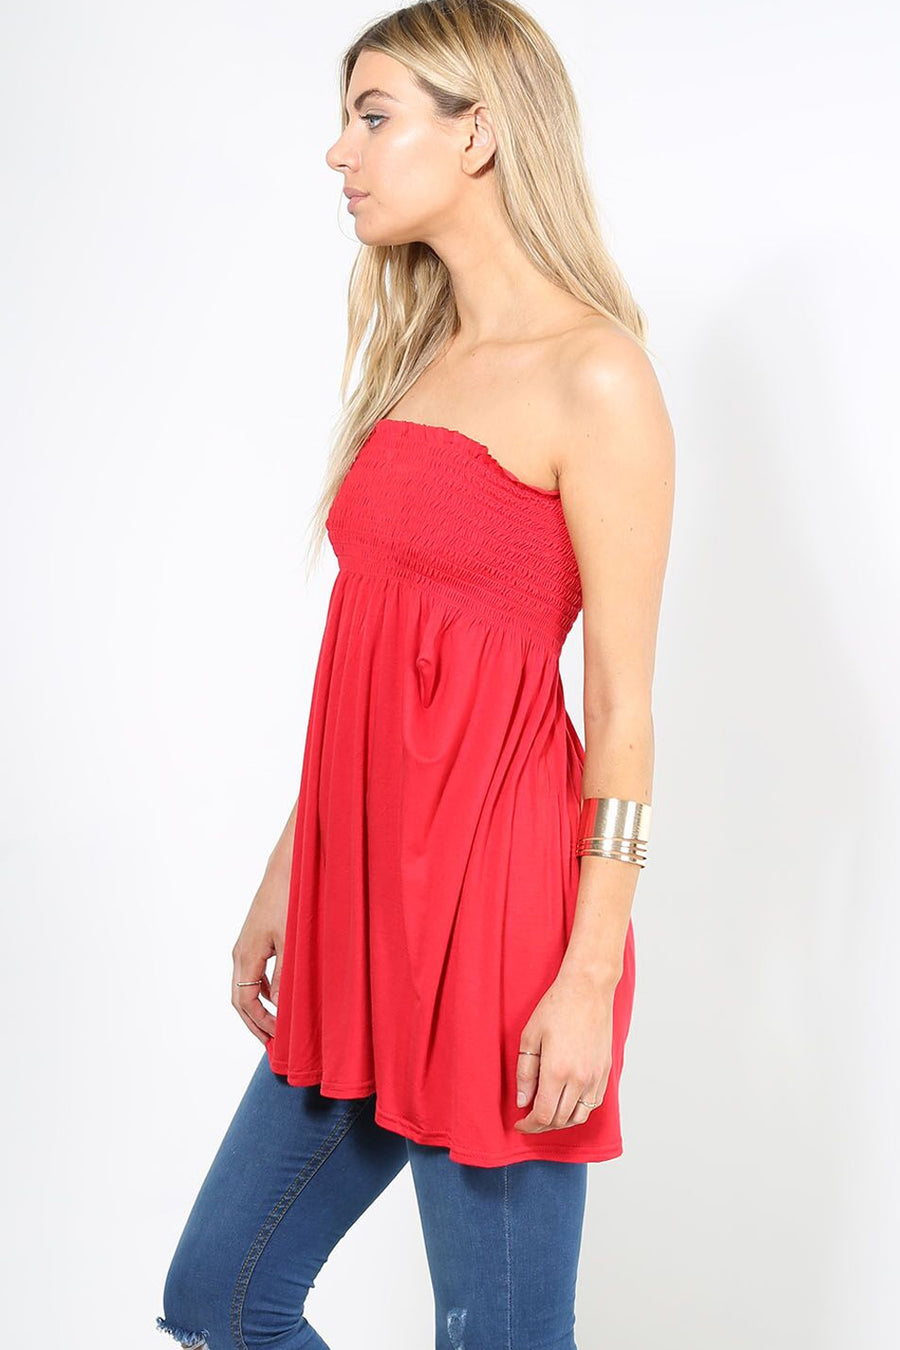 Shirring Bardot Basic Red Swing Top - bejealous-com